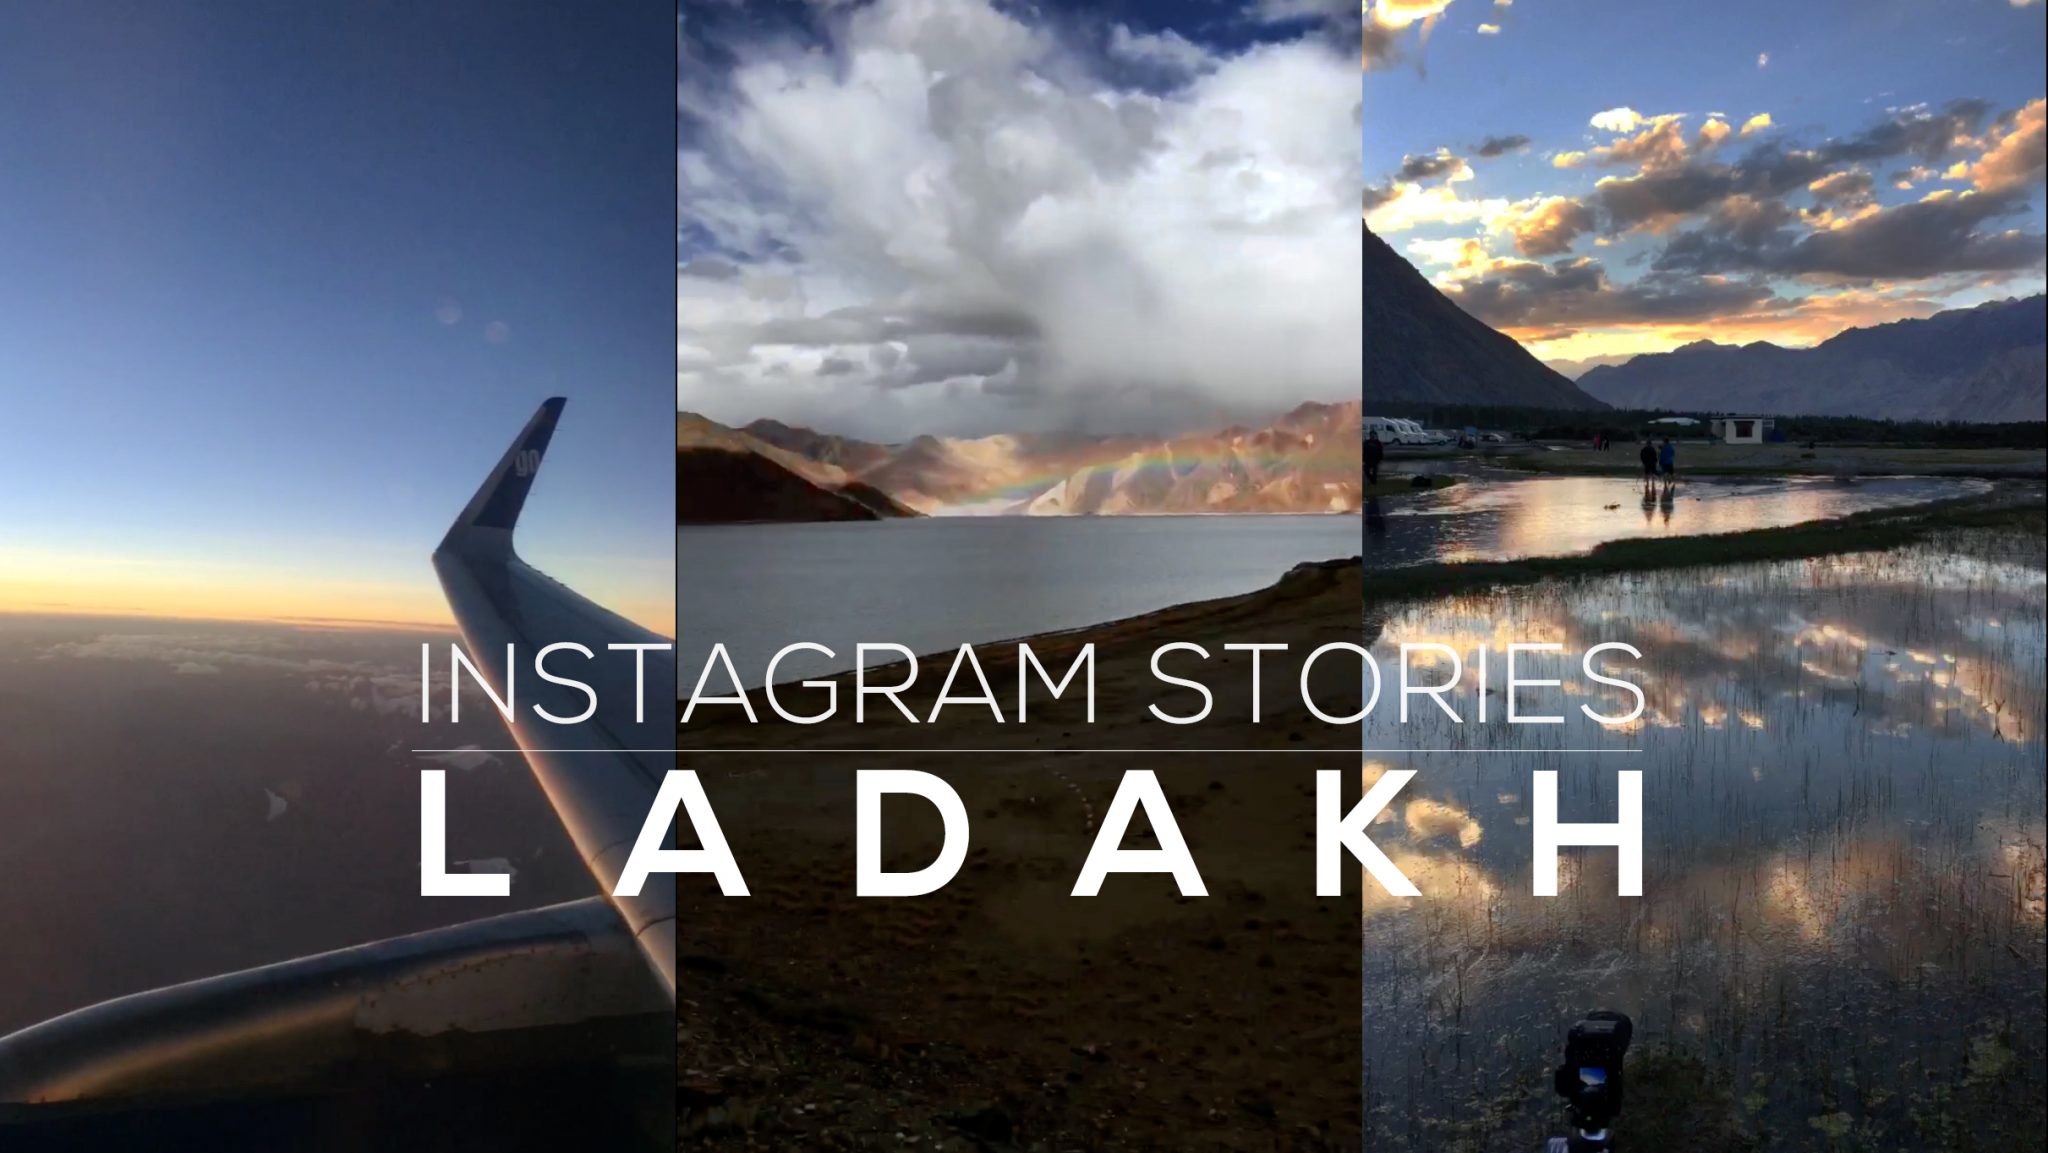 Ladakh Instagram Stories Collection